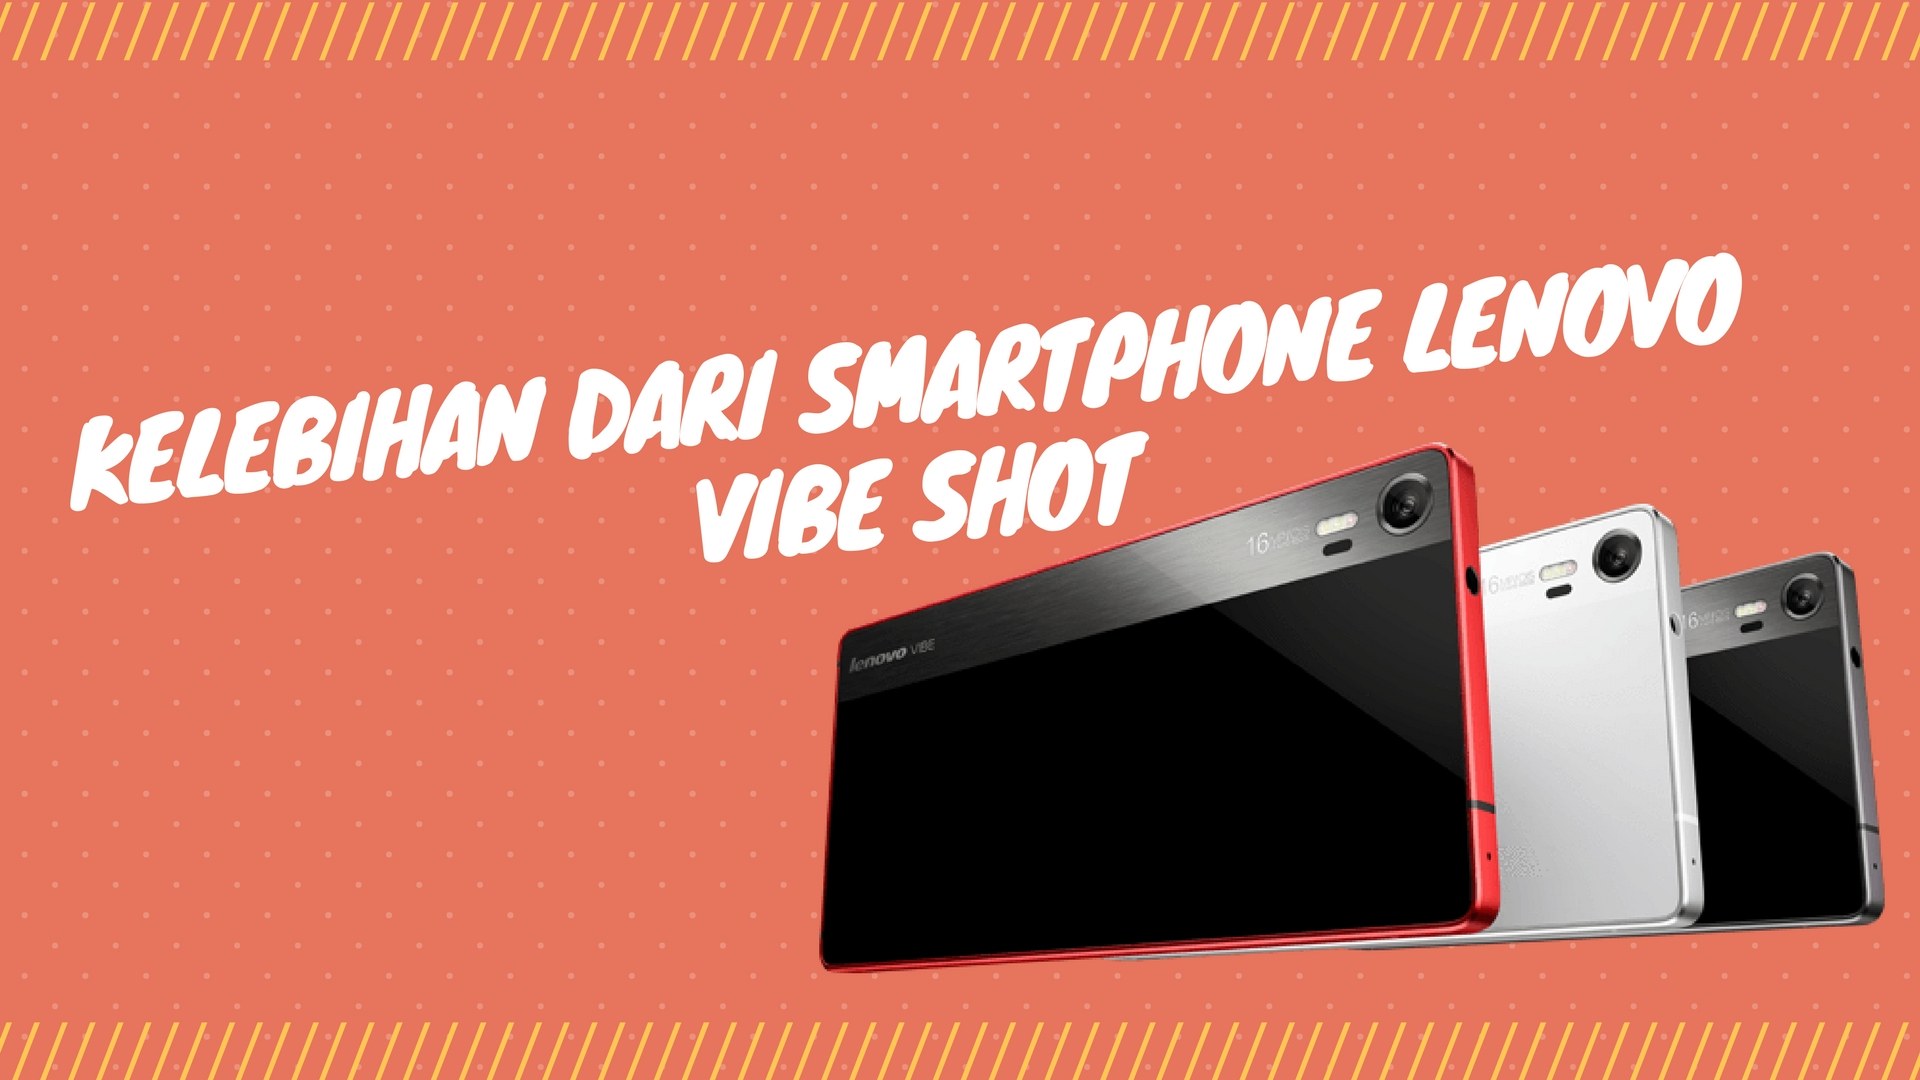 Ini Dia Kelebihan dari Smartphone Lenovo Vibe Shot